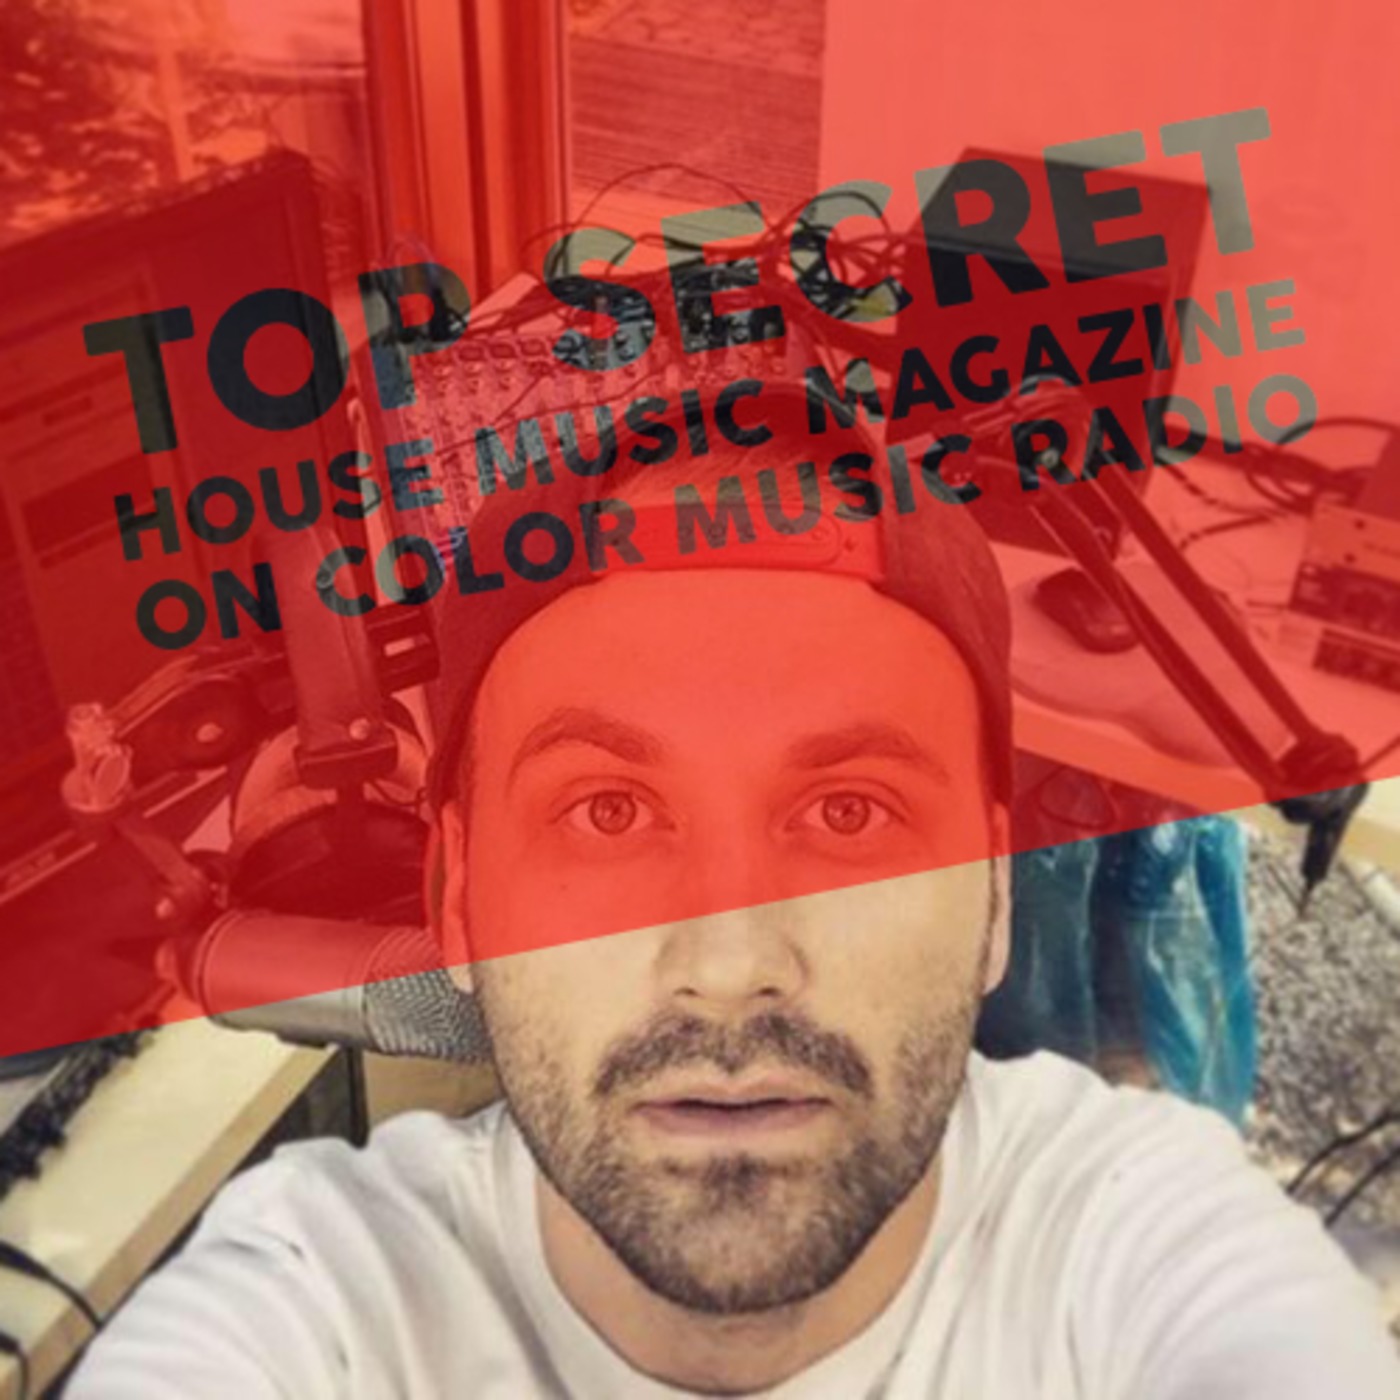 Top Secret MAGAZINE - HOUSE MUSIC MAGAZINE